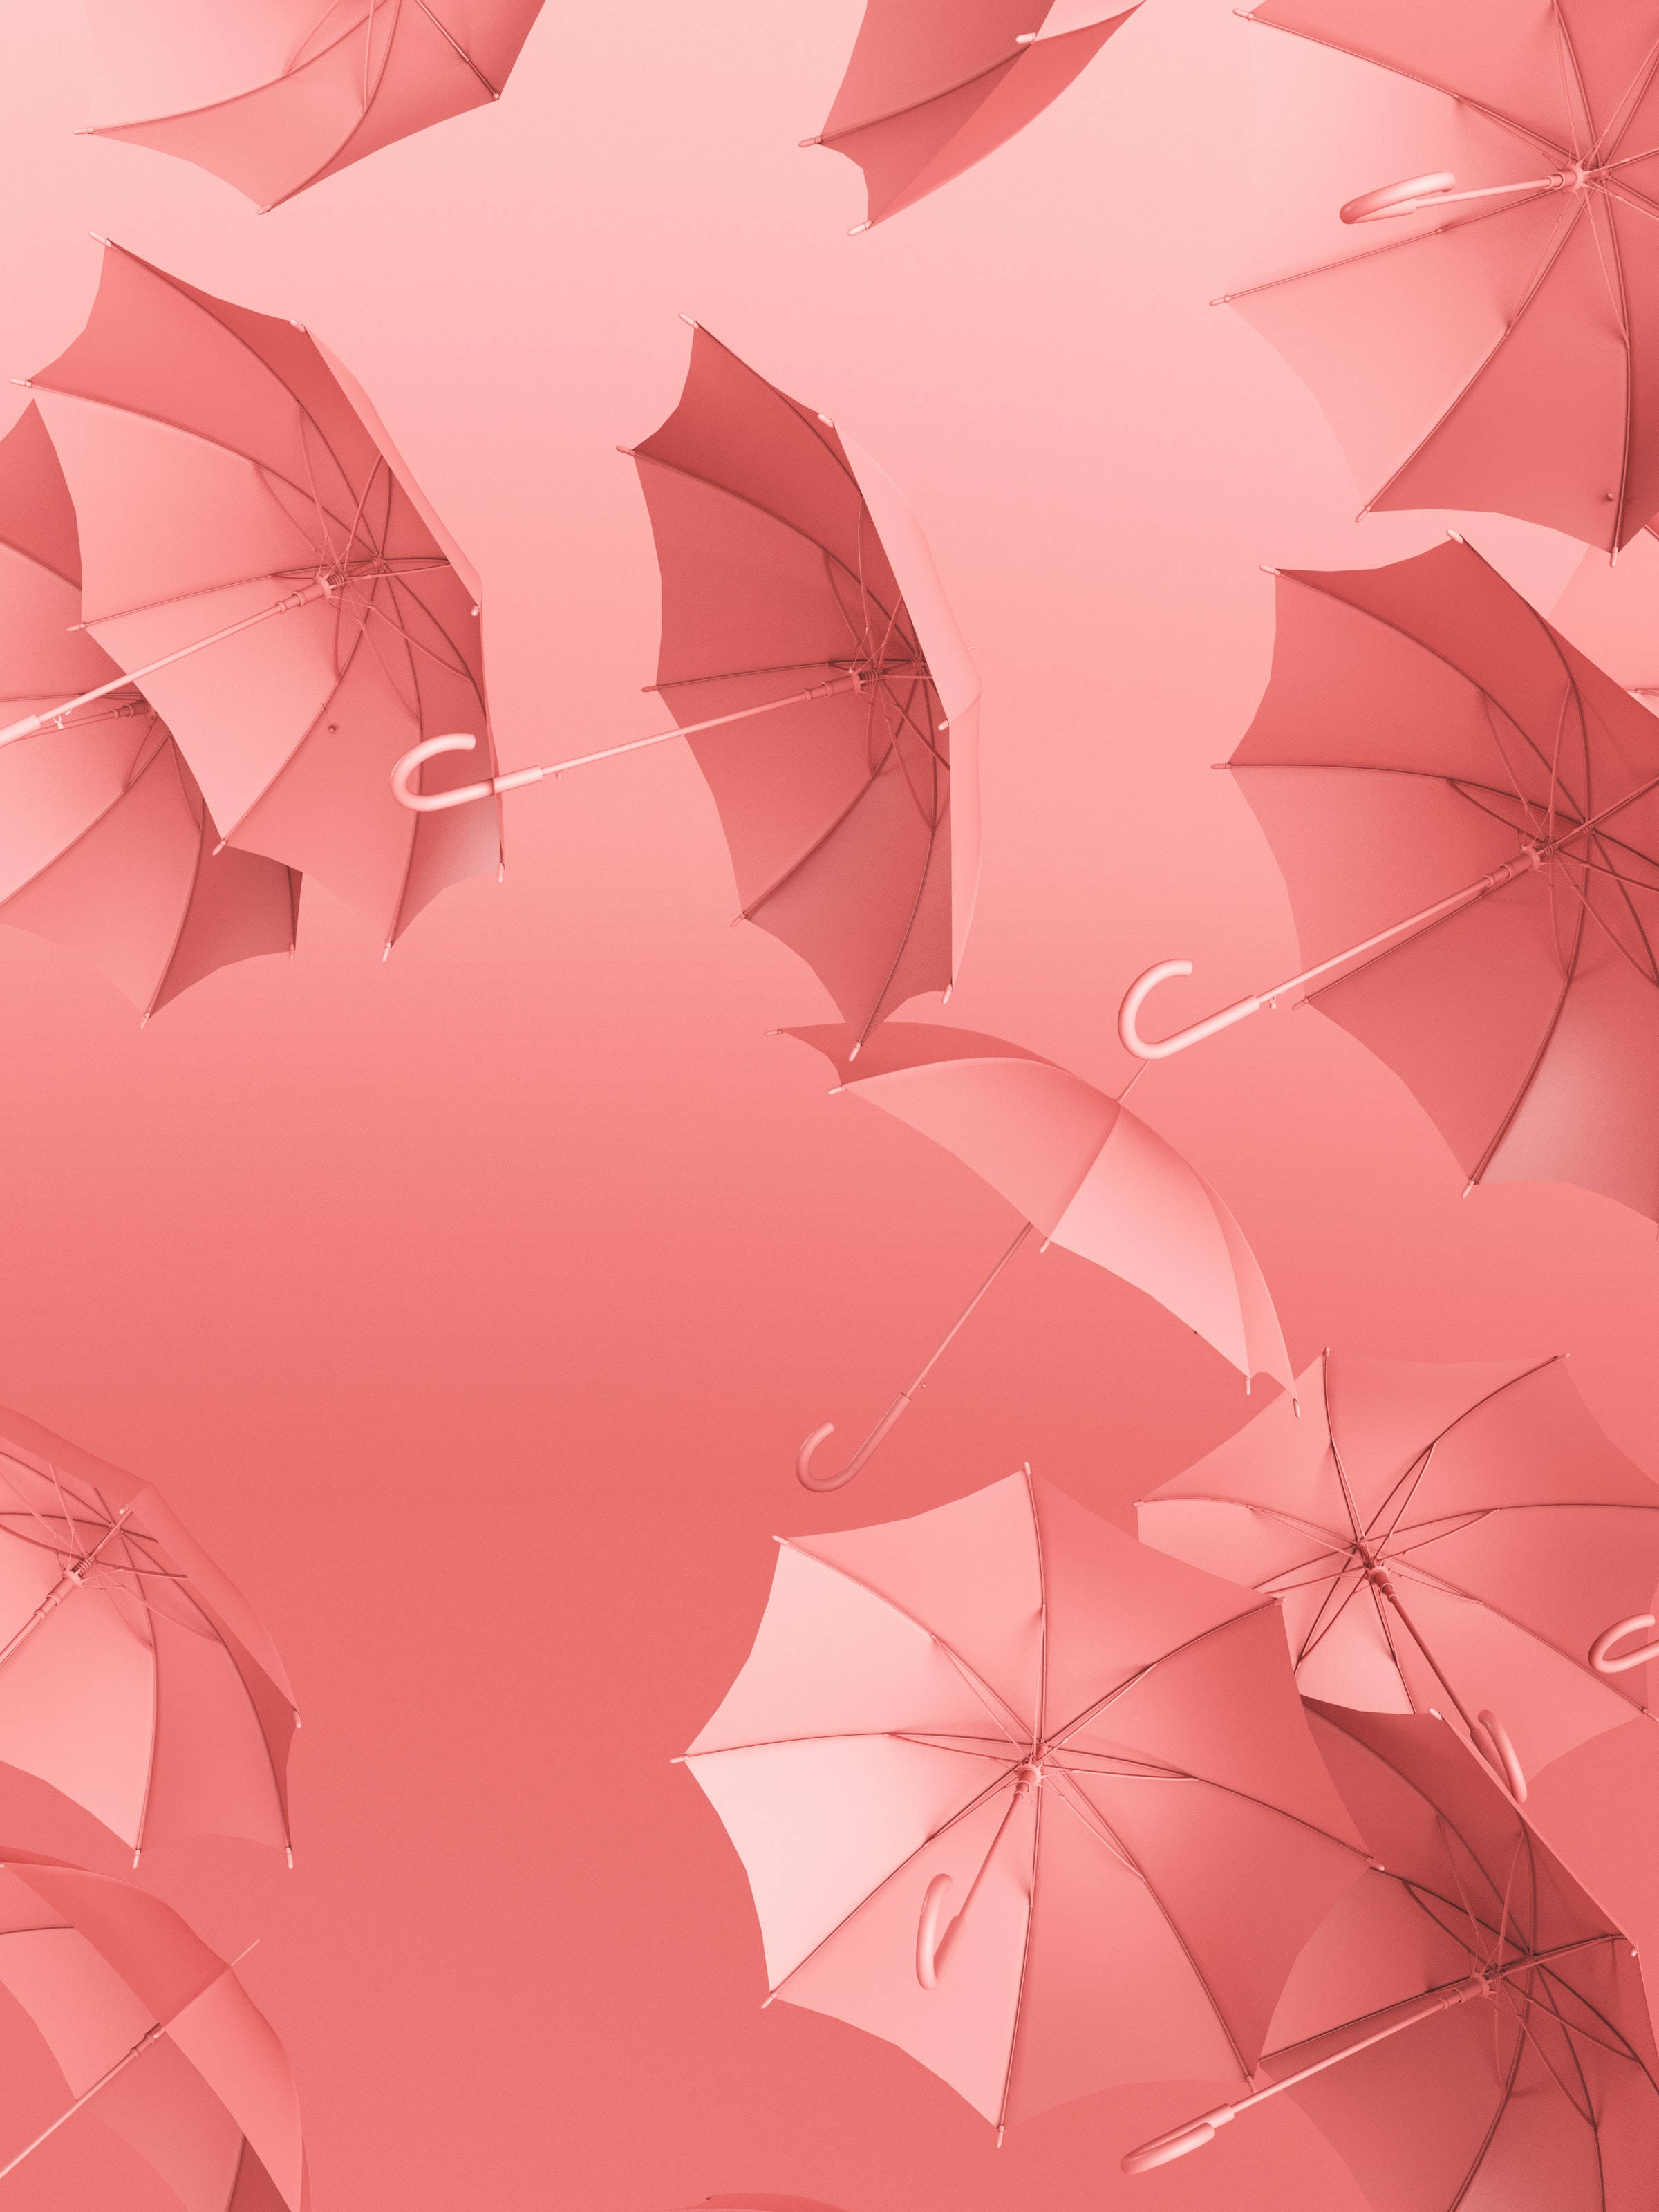 Free Light Pink Aesthetic Wallpaper Downloads, Light Pink Aesthetic Wallpaper for FREE